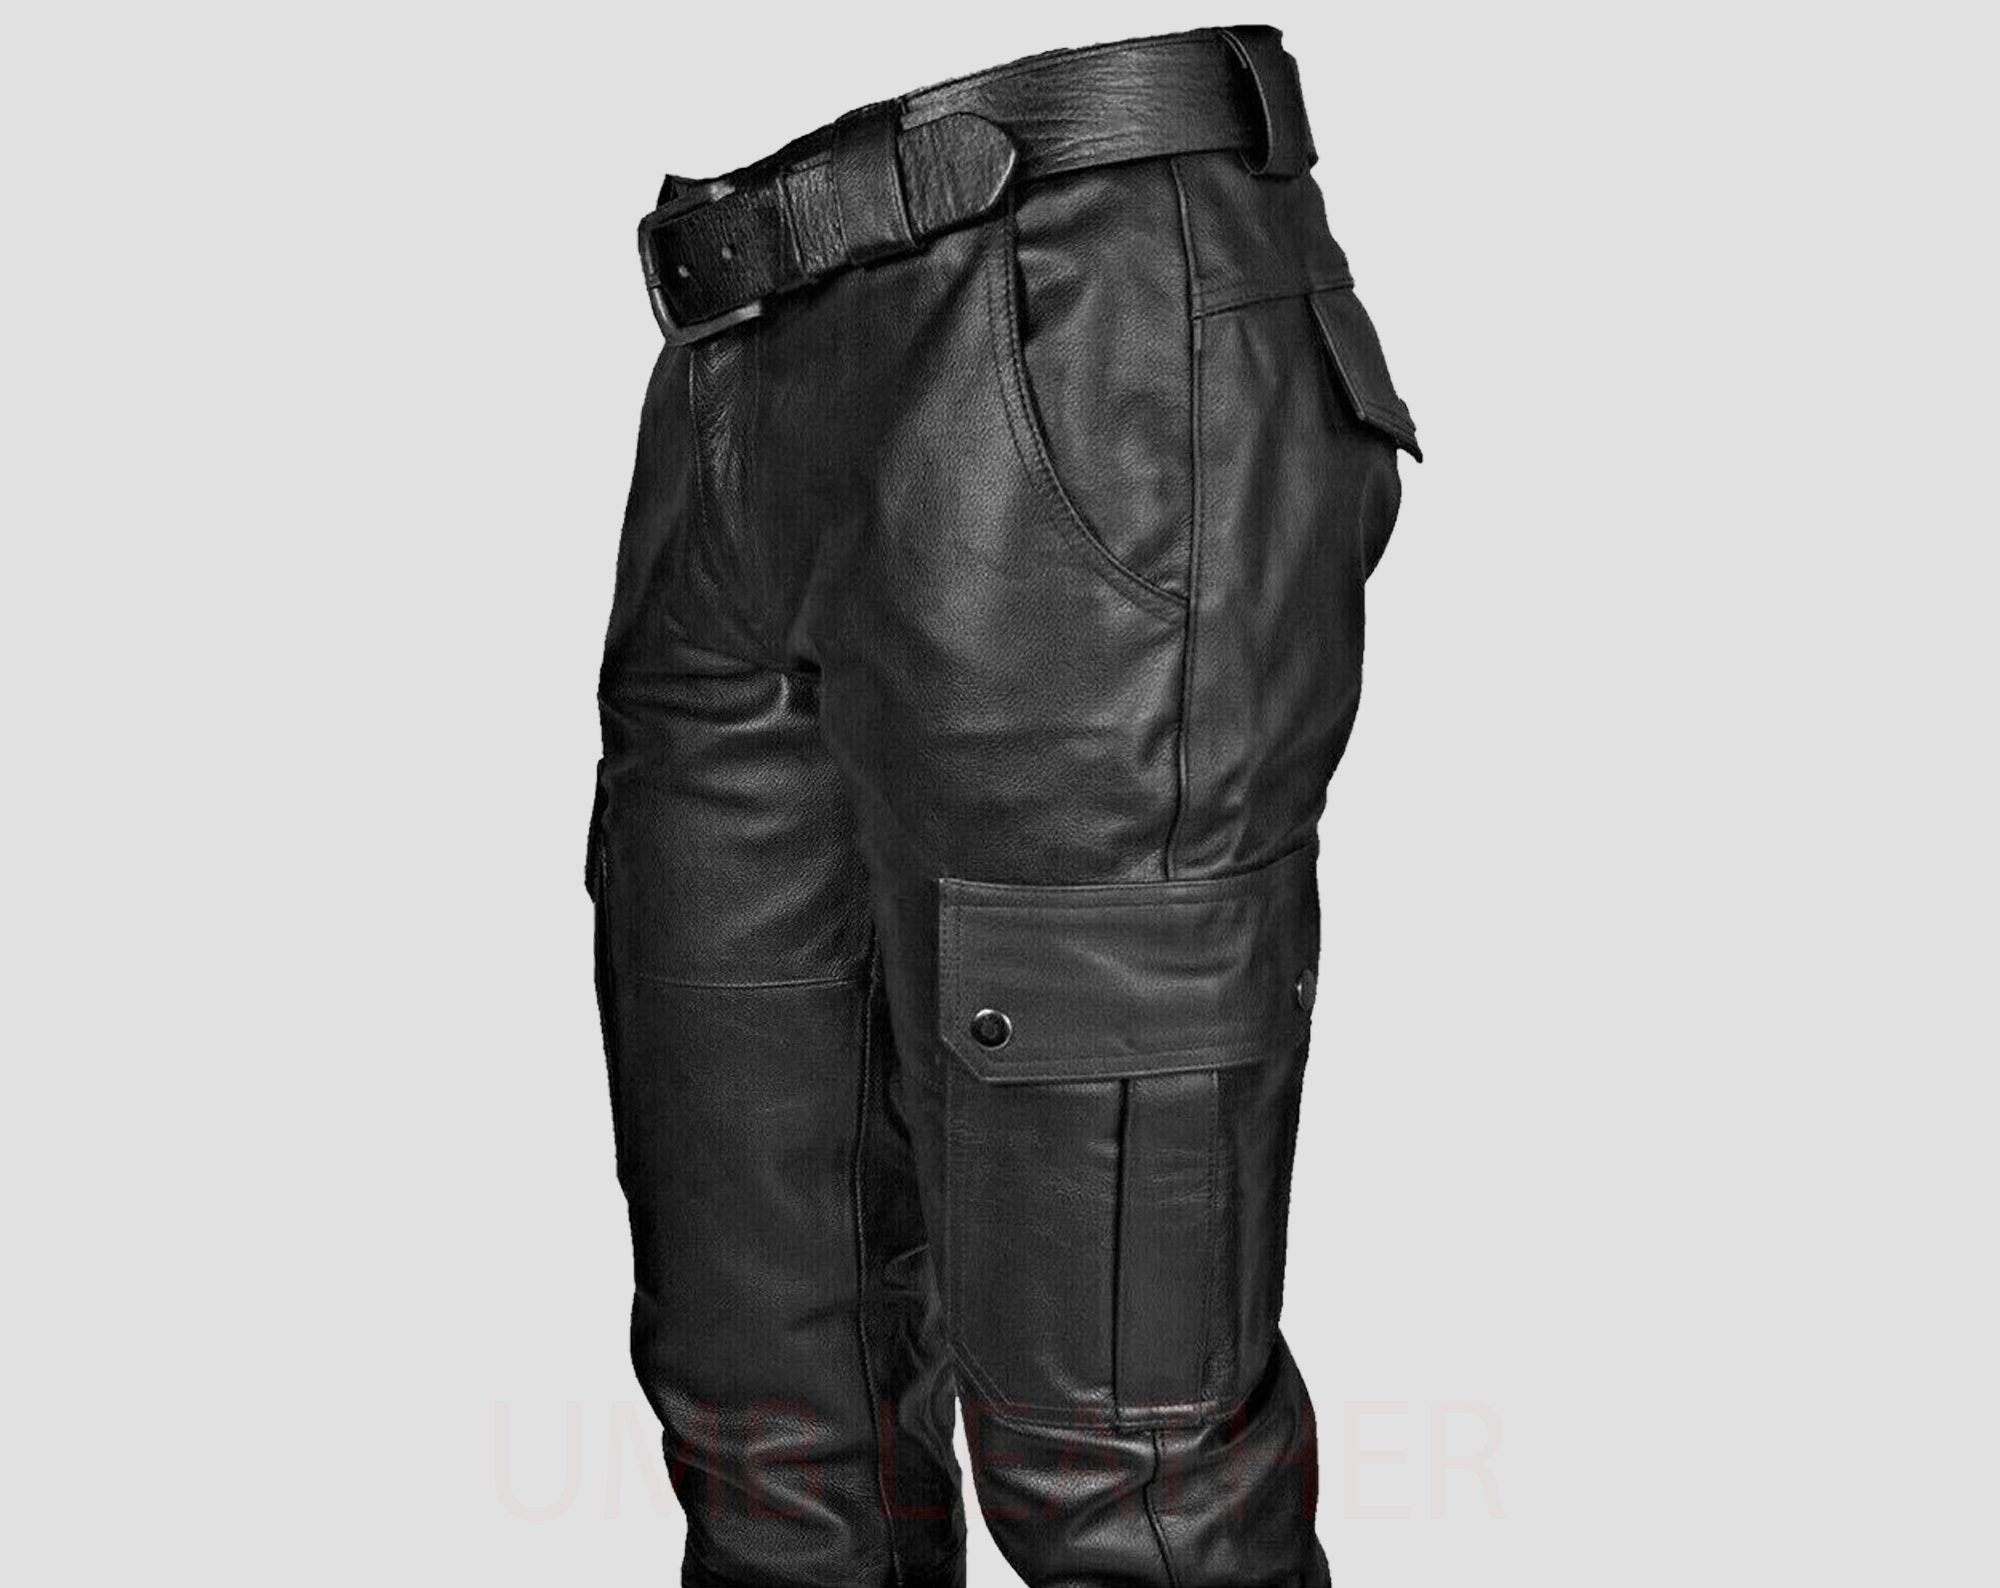 Sapper Cargos  Buy Sapper 6 Pocket Trekking Cargo Pants  Black Online   Nykaa Fashion